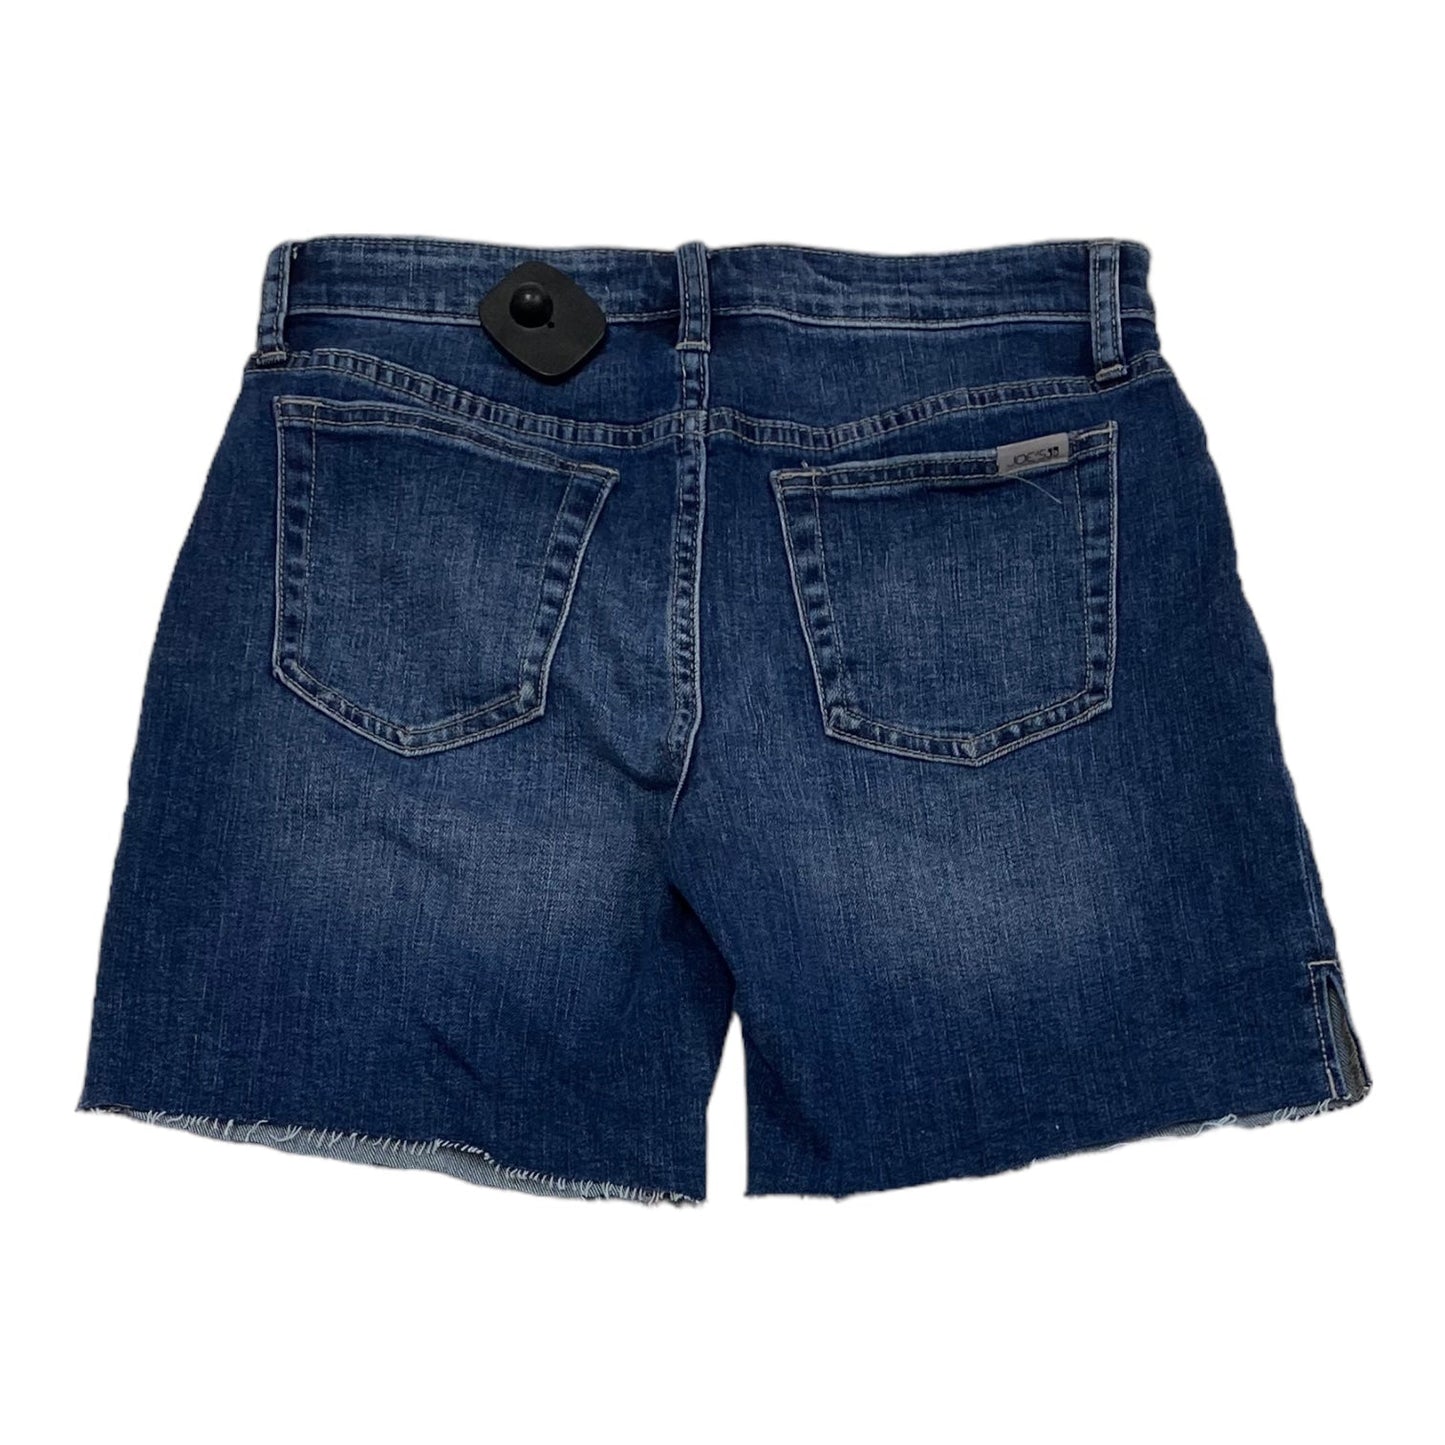 Blue Denim Shorts Joes Jeans, Size 2